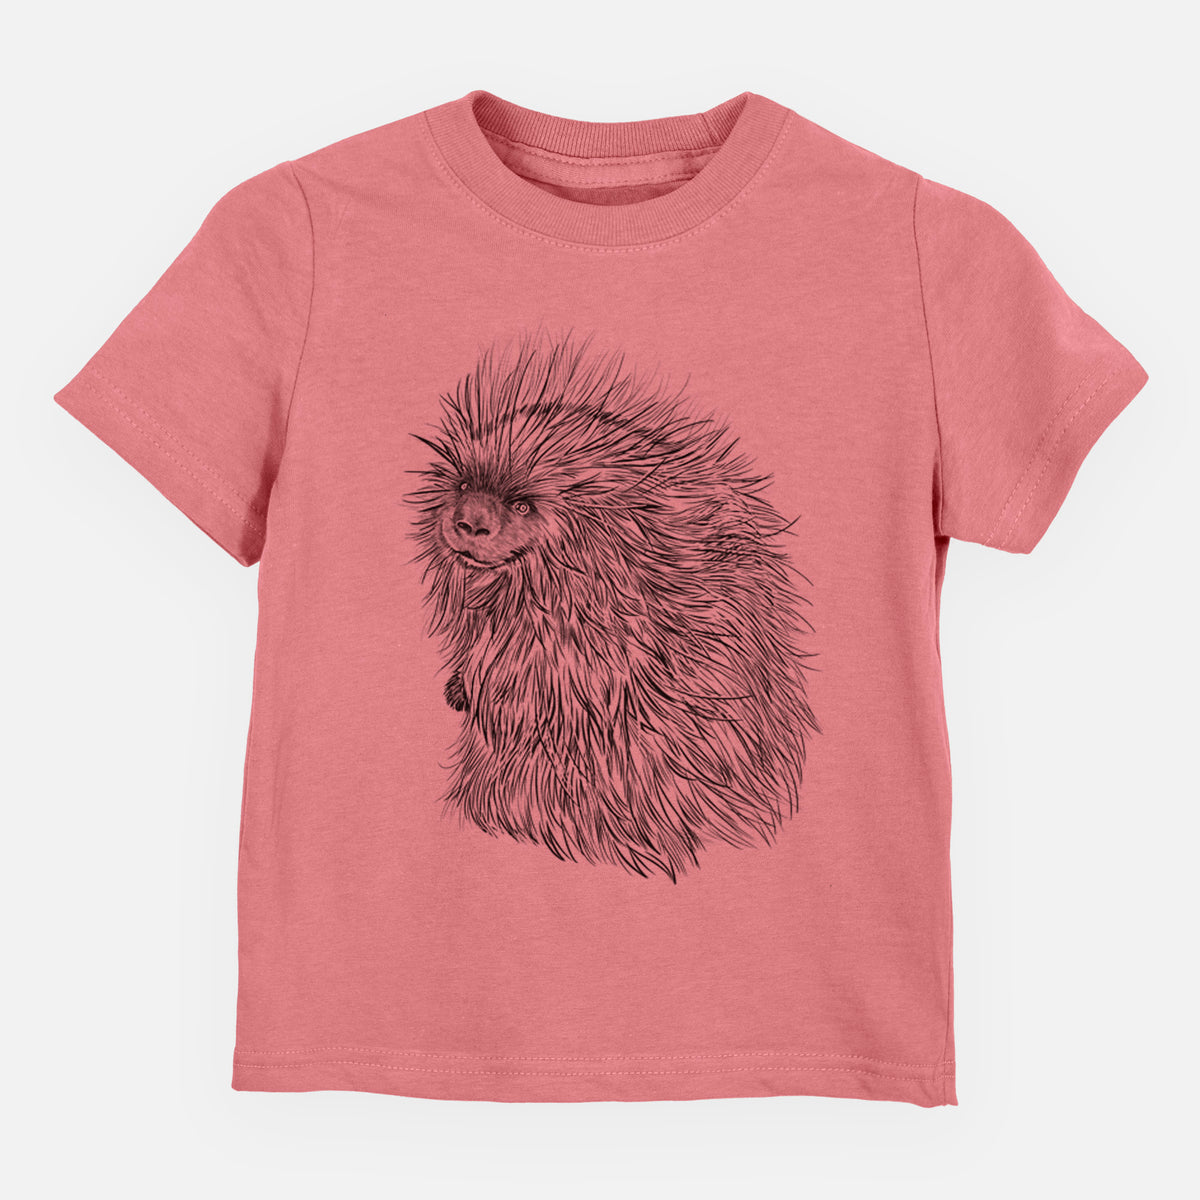 North American Porcupine - Erethizon dorsatum - Kids Shirt